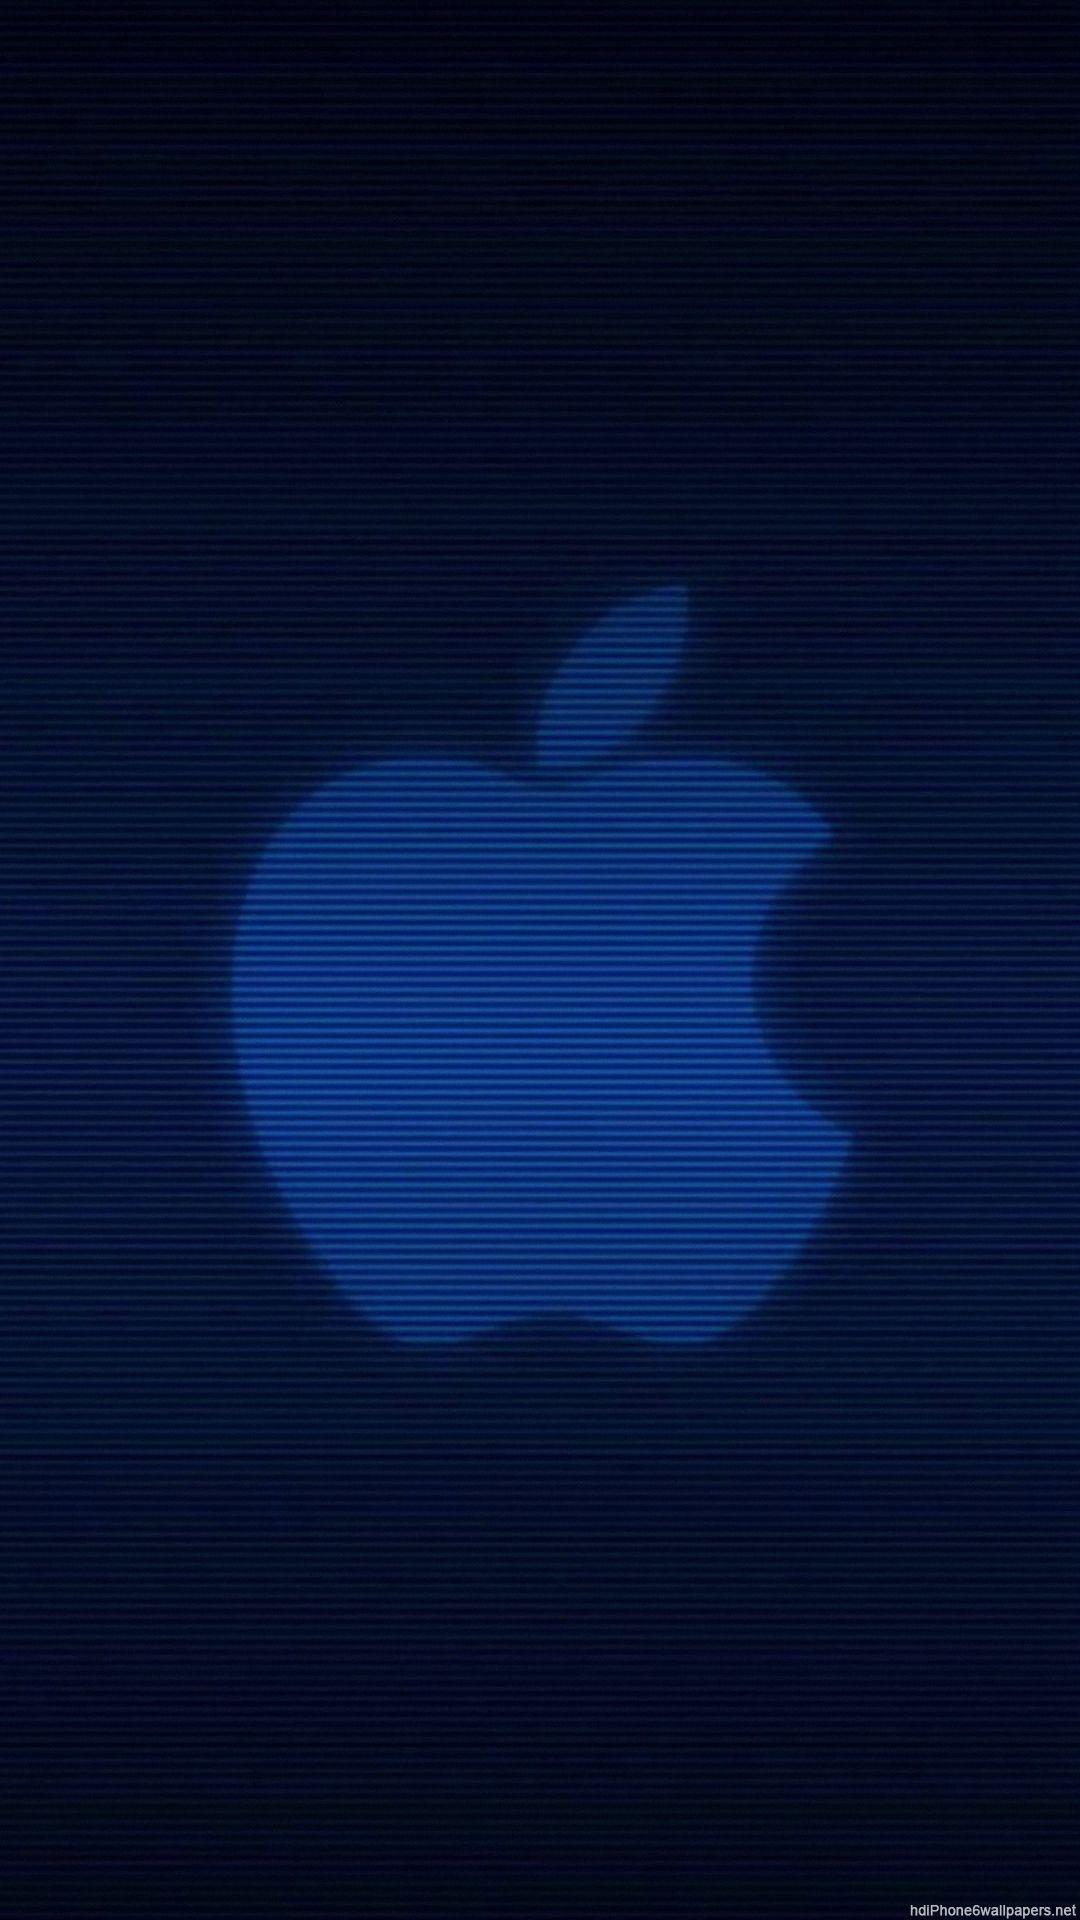 apple logo iPhone 6 wallpaper HD and 1080P 6 Plus Wallpaper